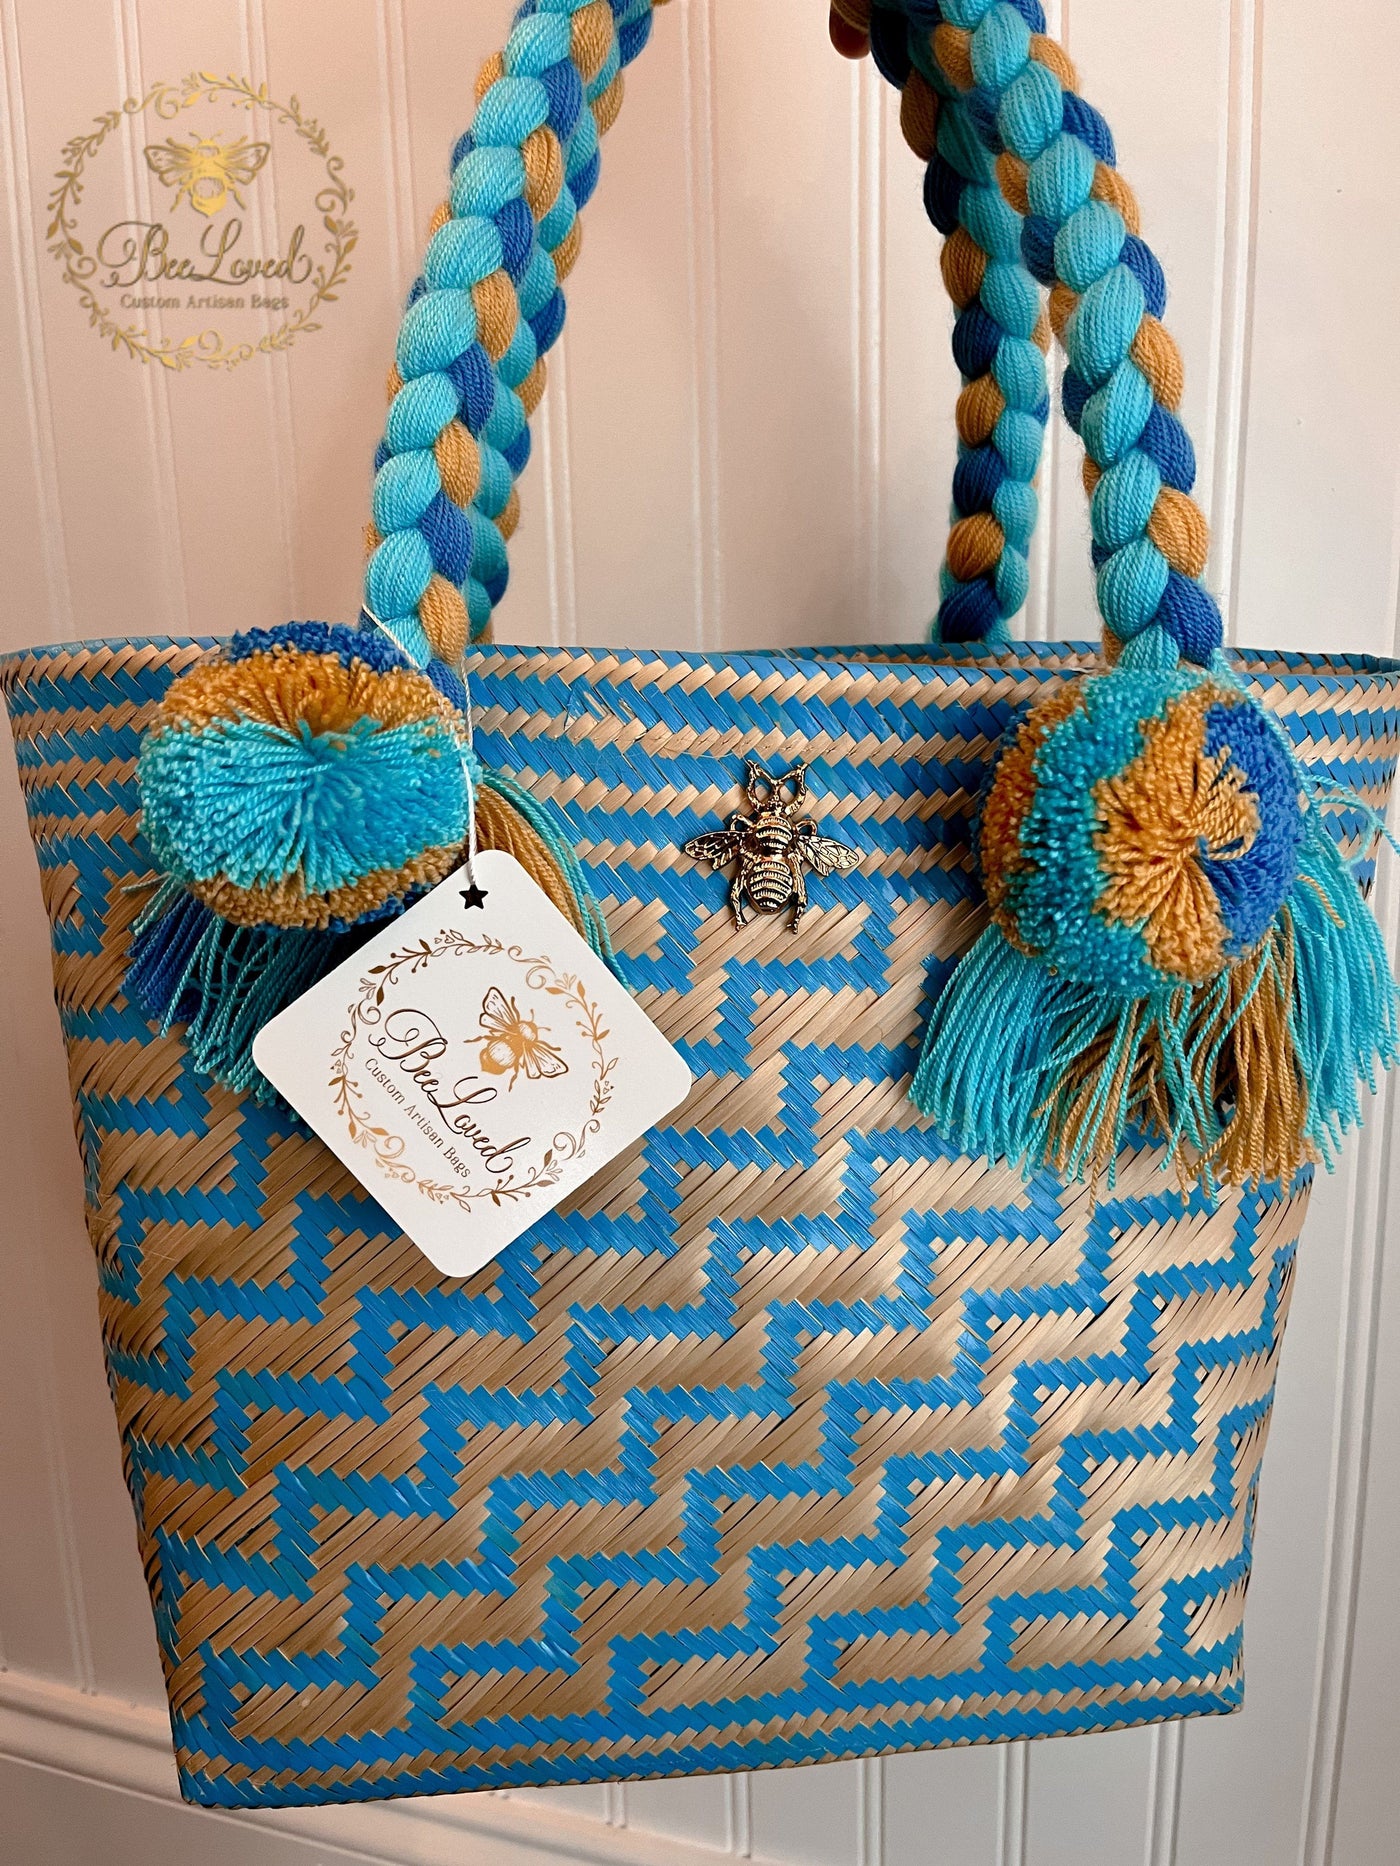 BeeLoved Custom Artisan Bags and Gifts Handbags Light Blue Chevron Bag